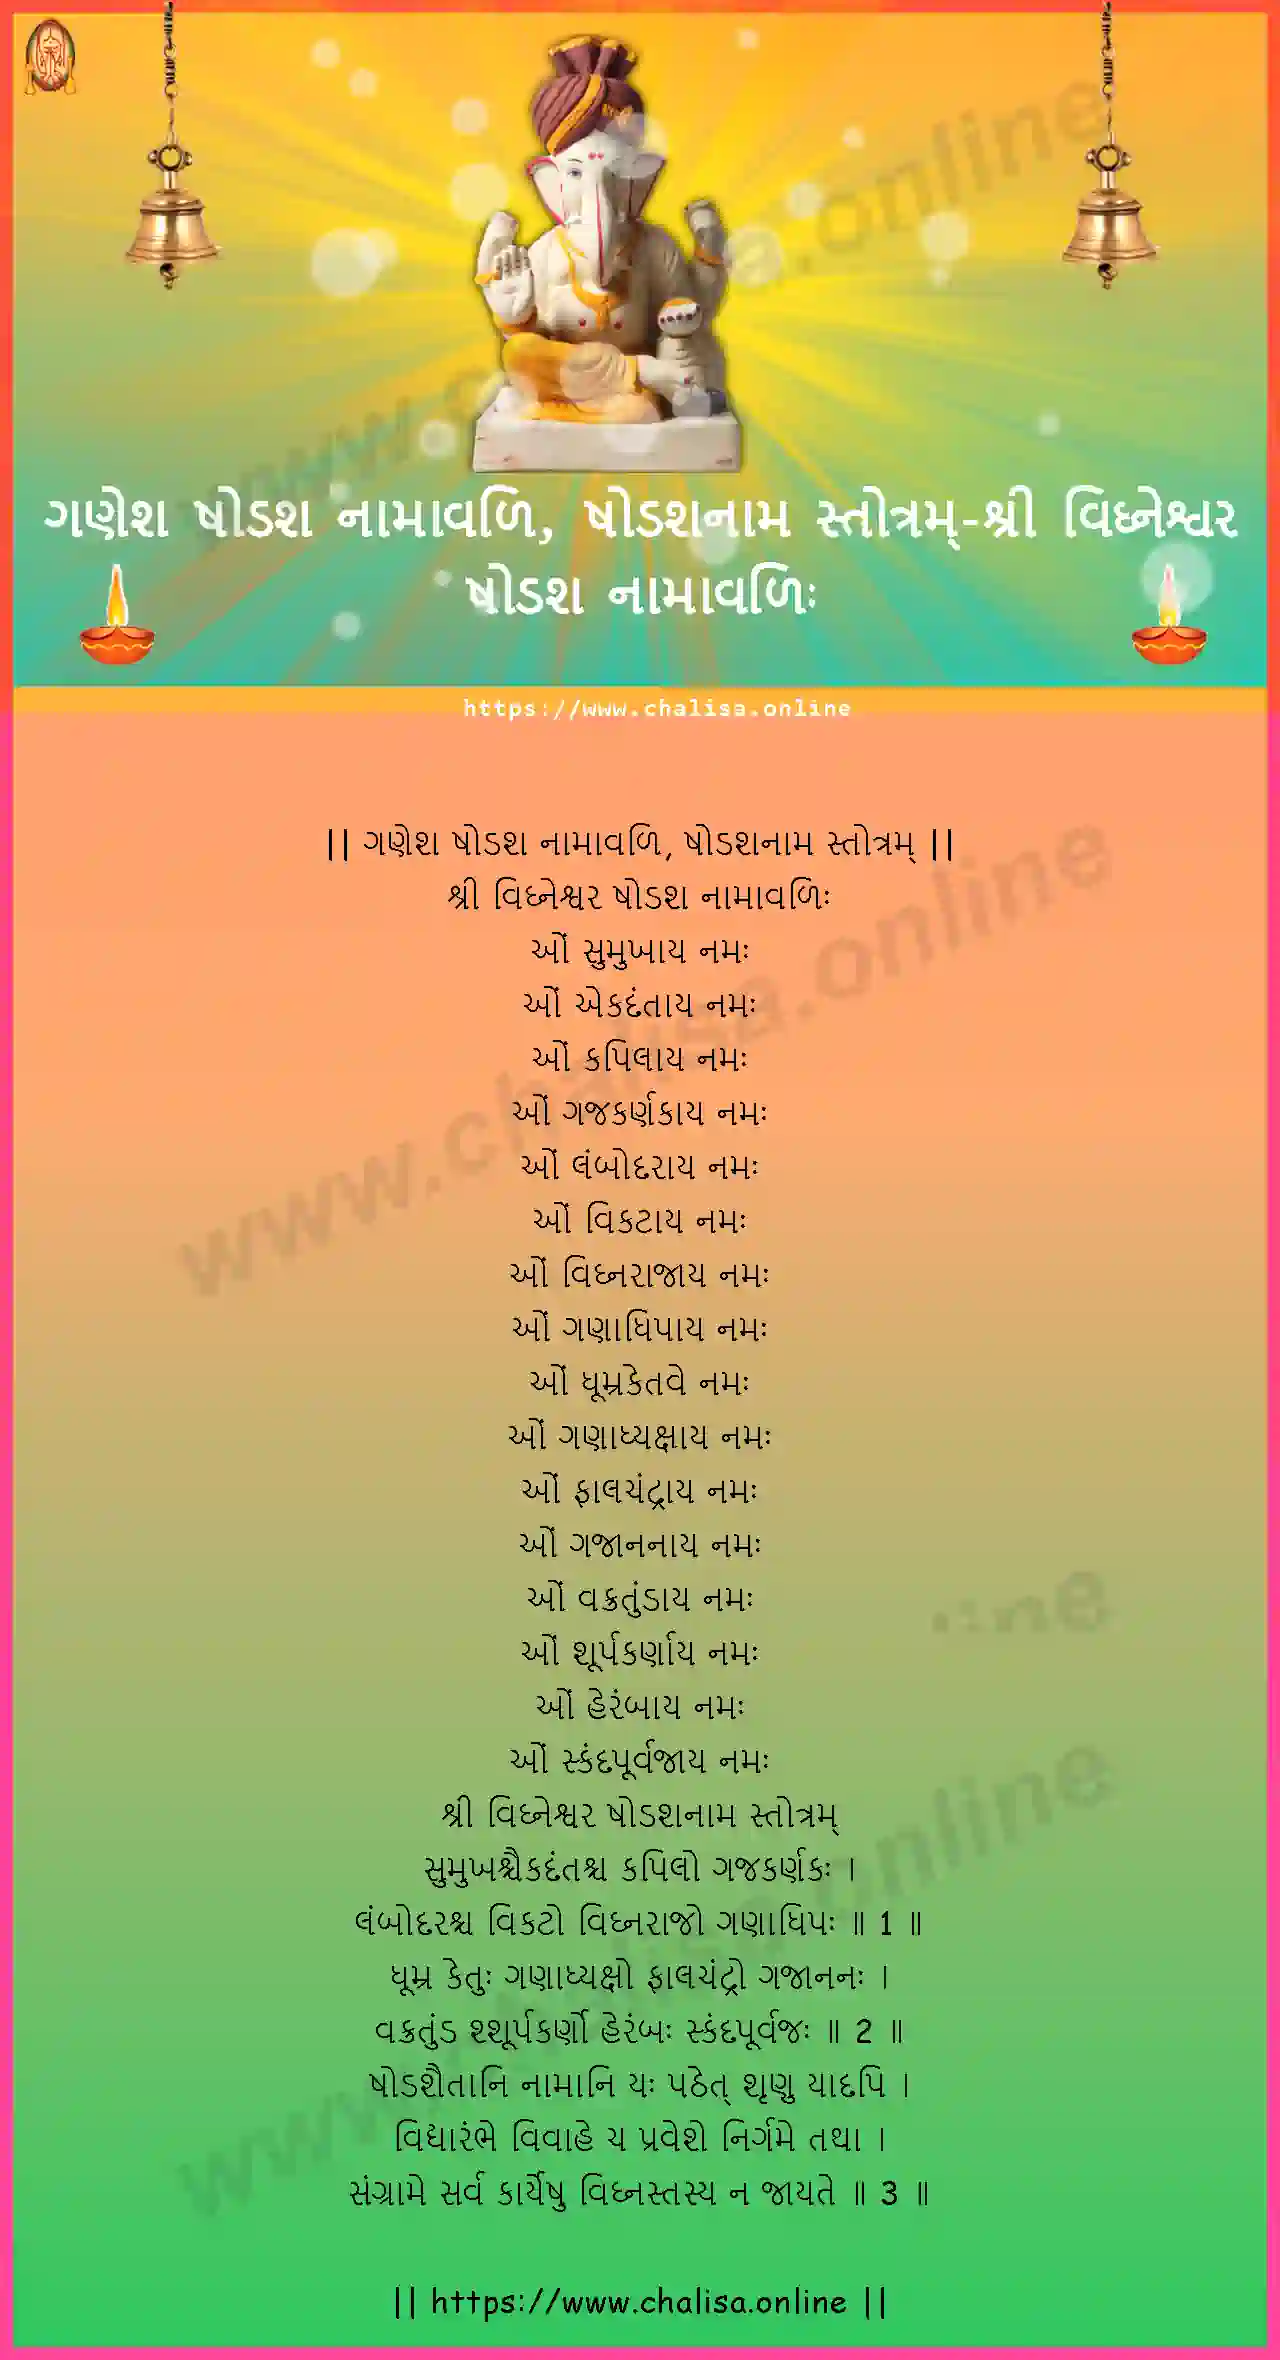 sri-vighnesvara-ganesha-shodasha-namavali,-shodashanama-stotram-gujarati-gujarati-lyrics-download